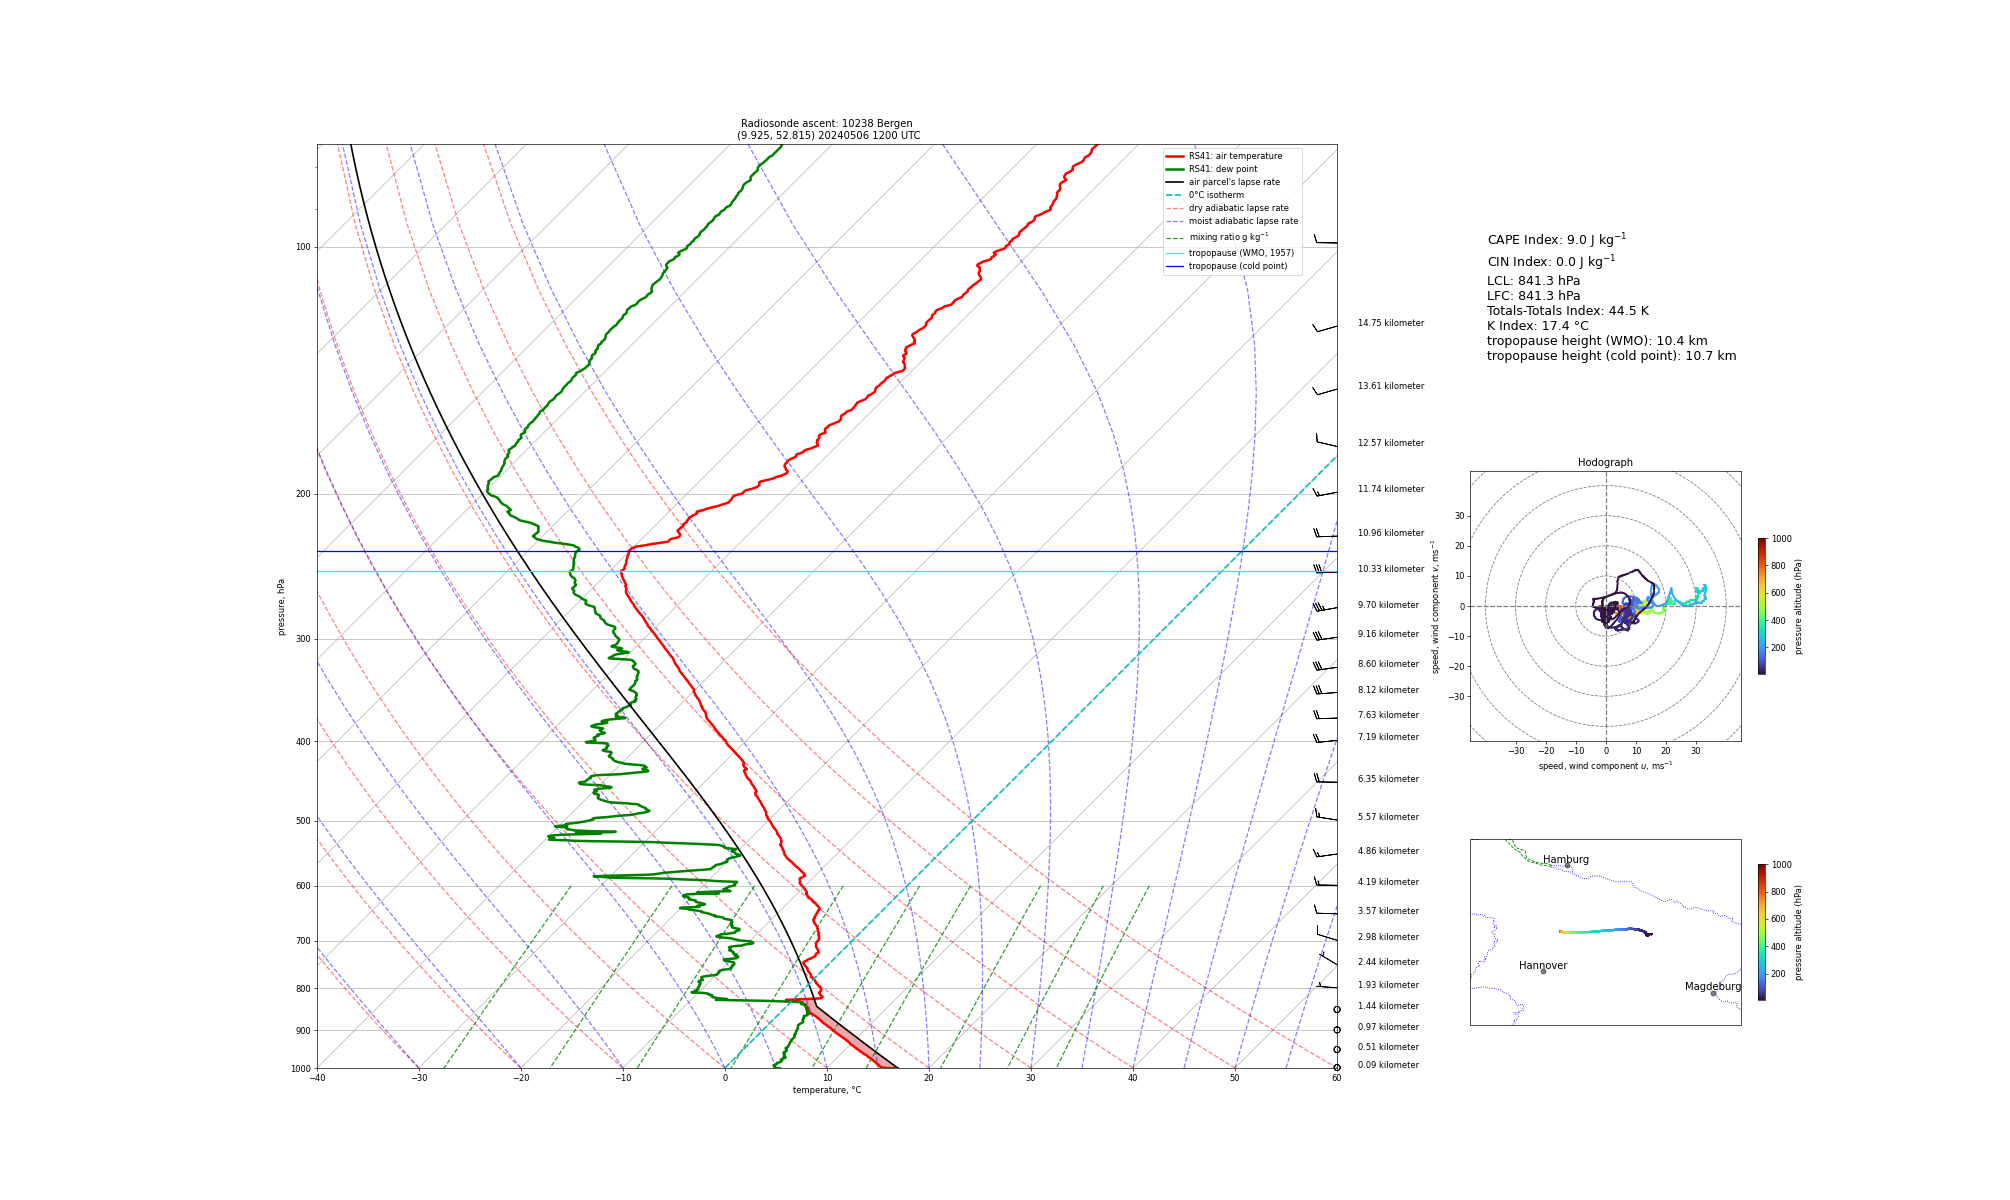 Visualisation of the radiosounding profile at Bergen at 1200 UTC